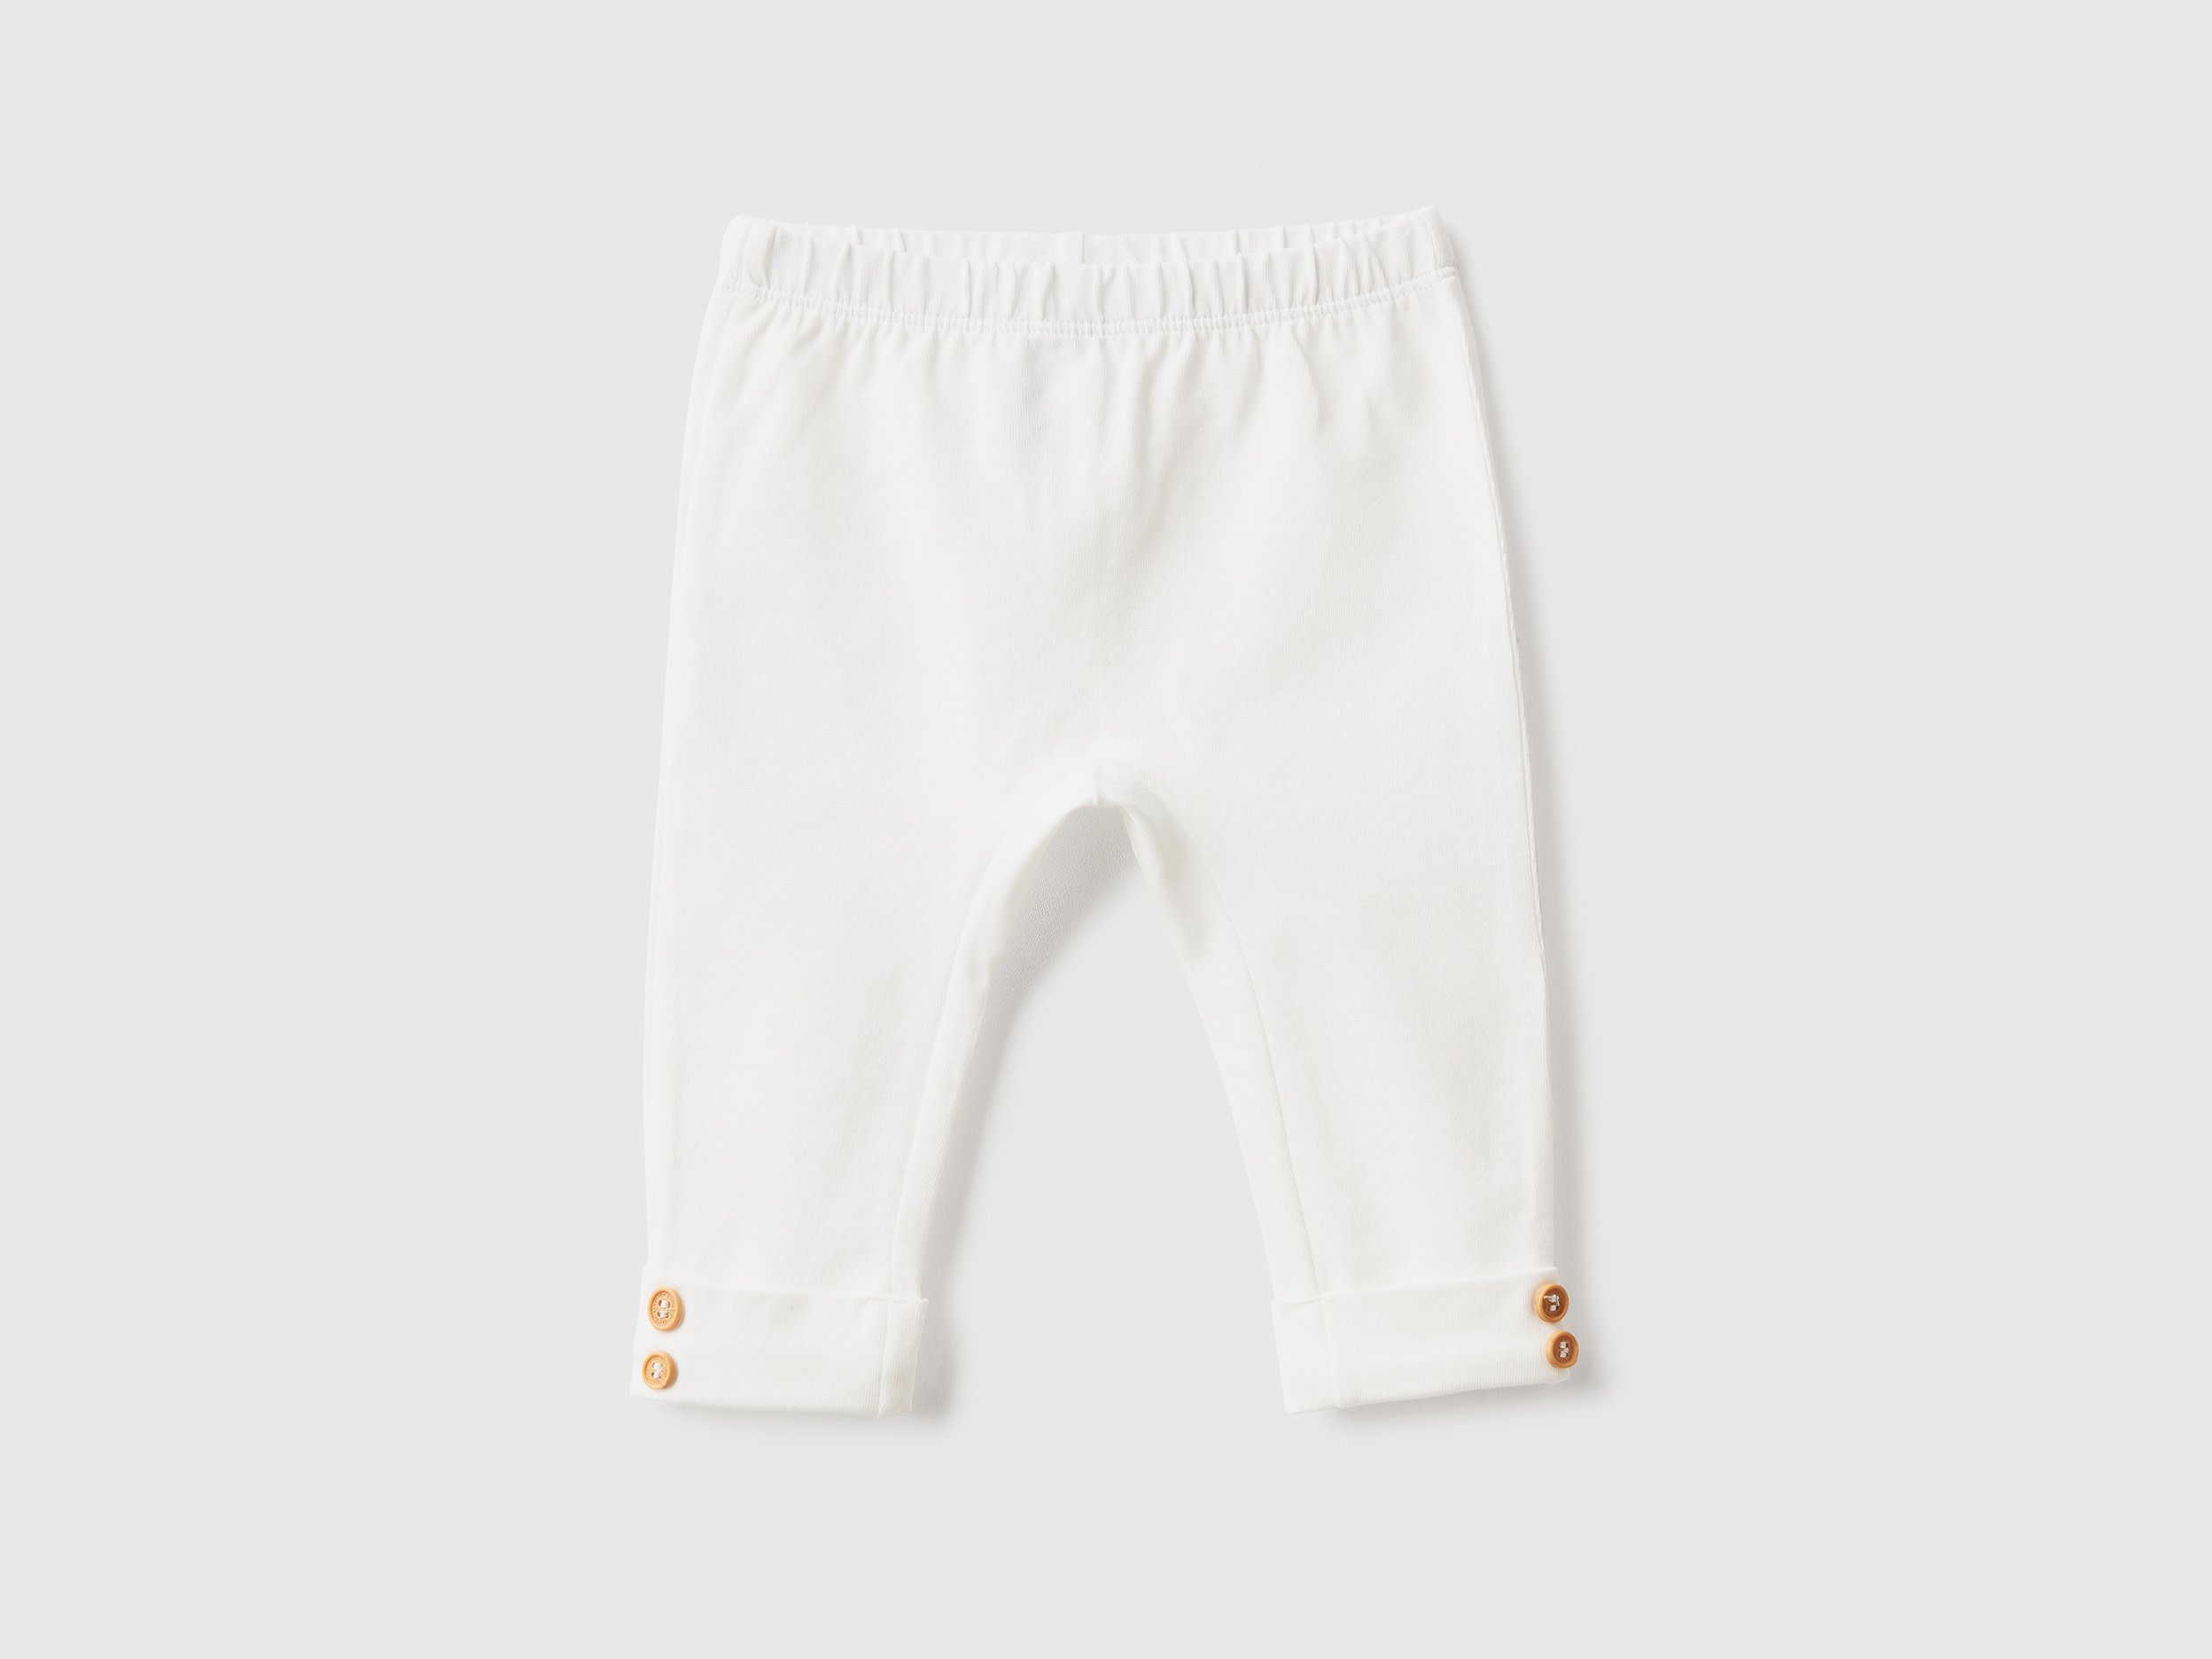 Benetton, Stretch Cotton Leggings, size 0-1, Creamy White, Kids